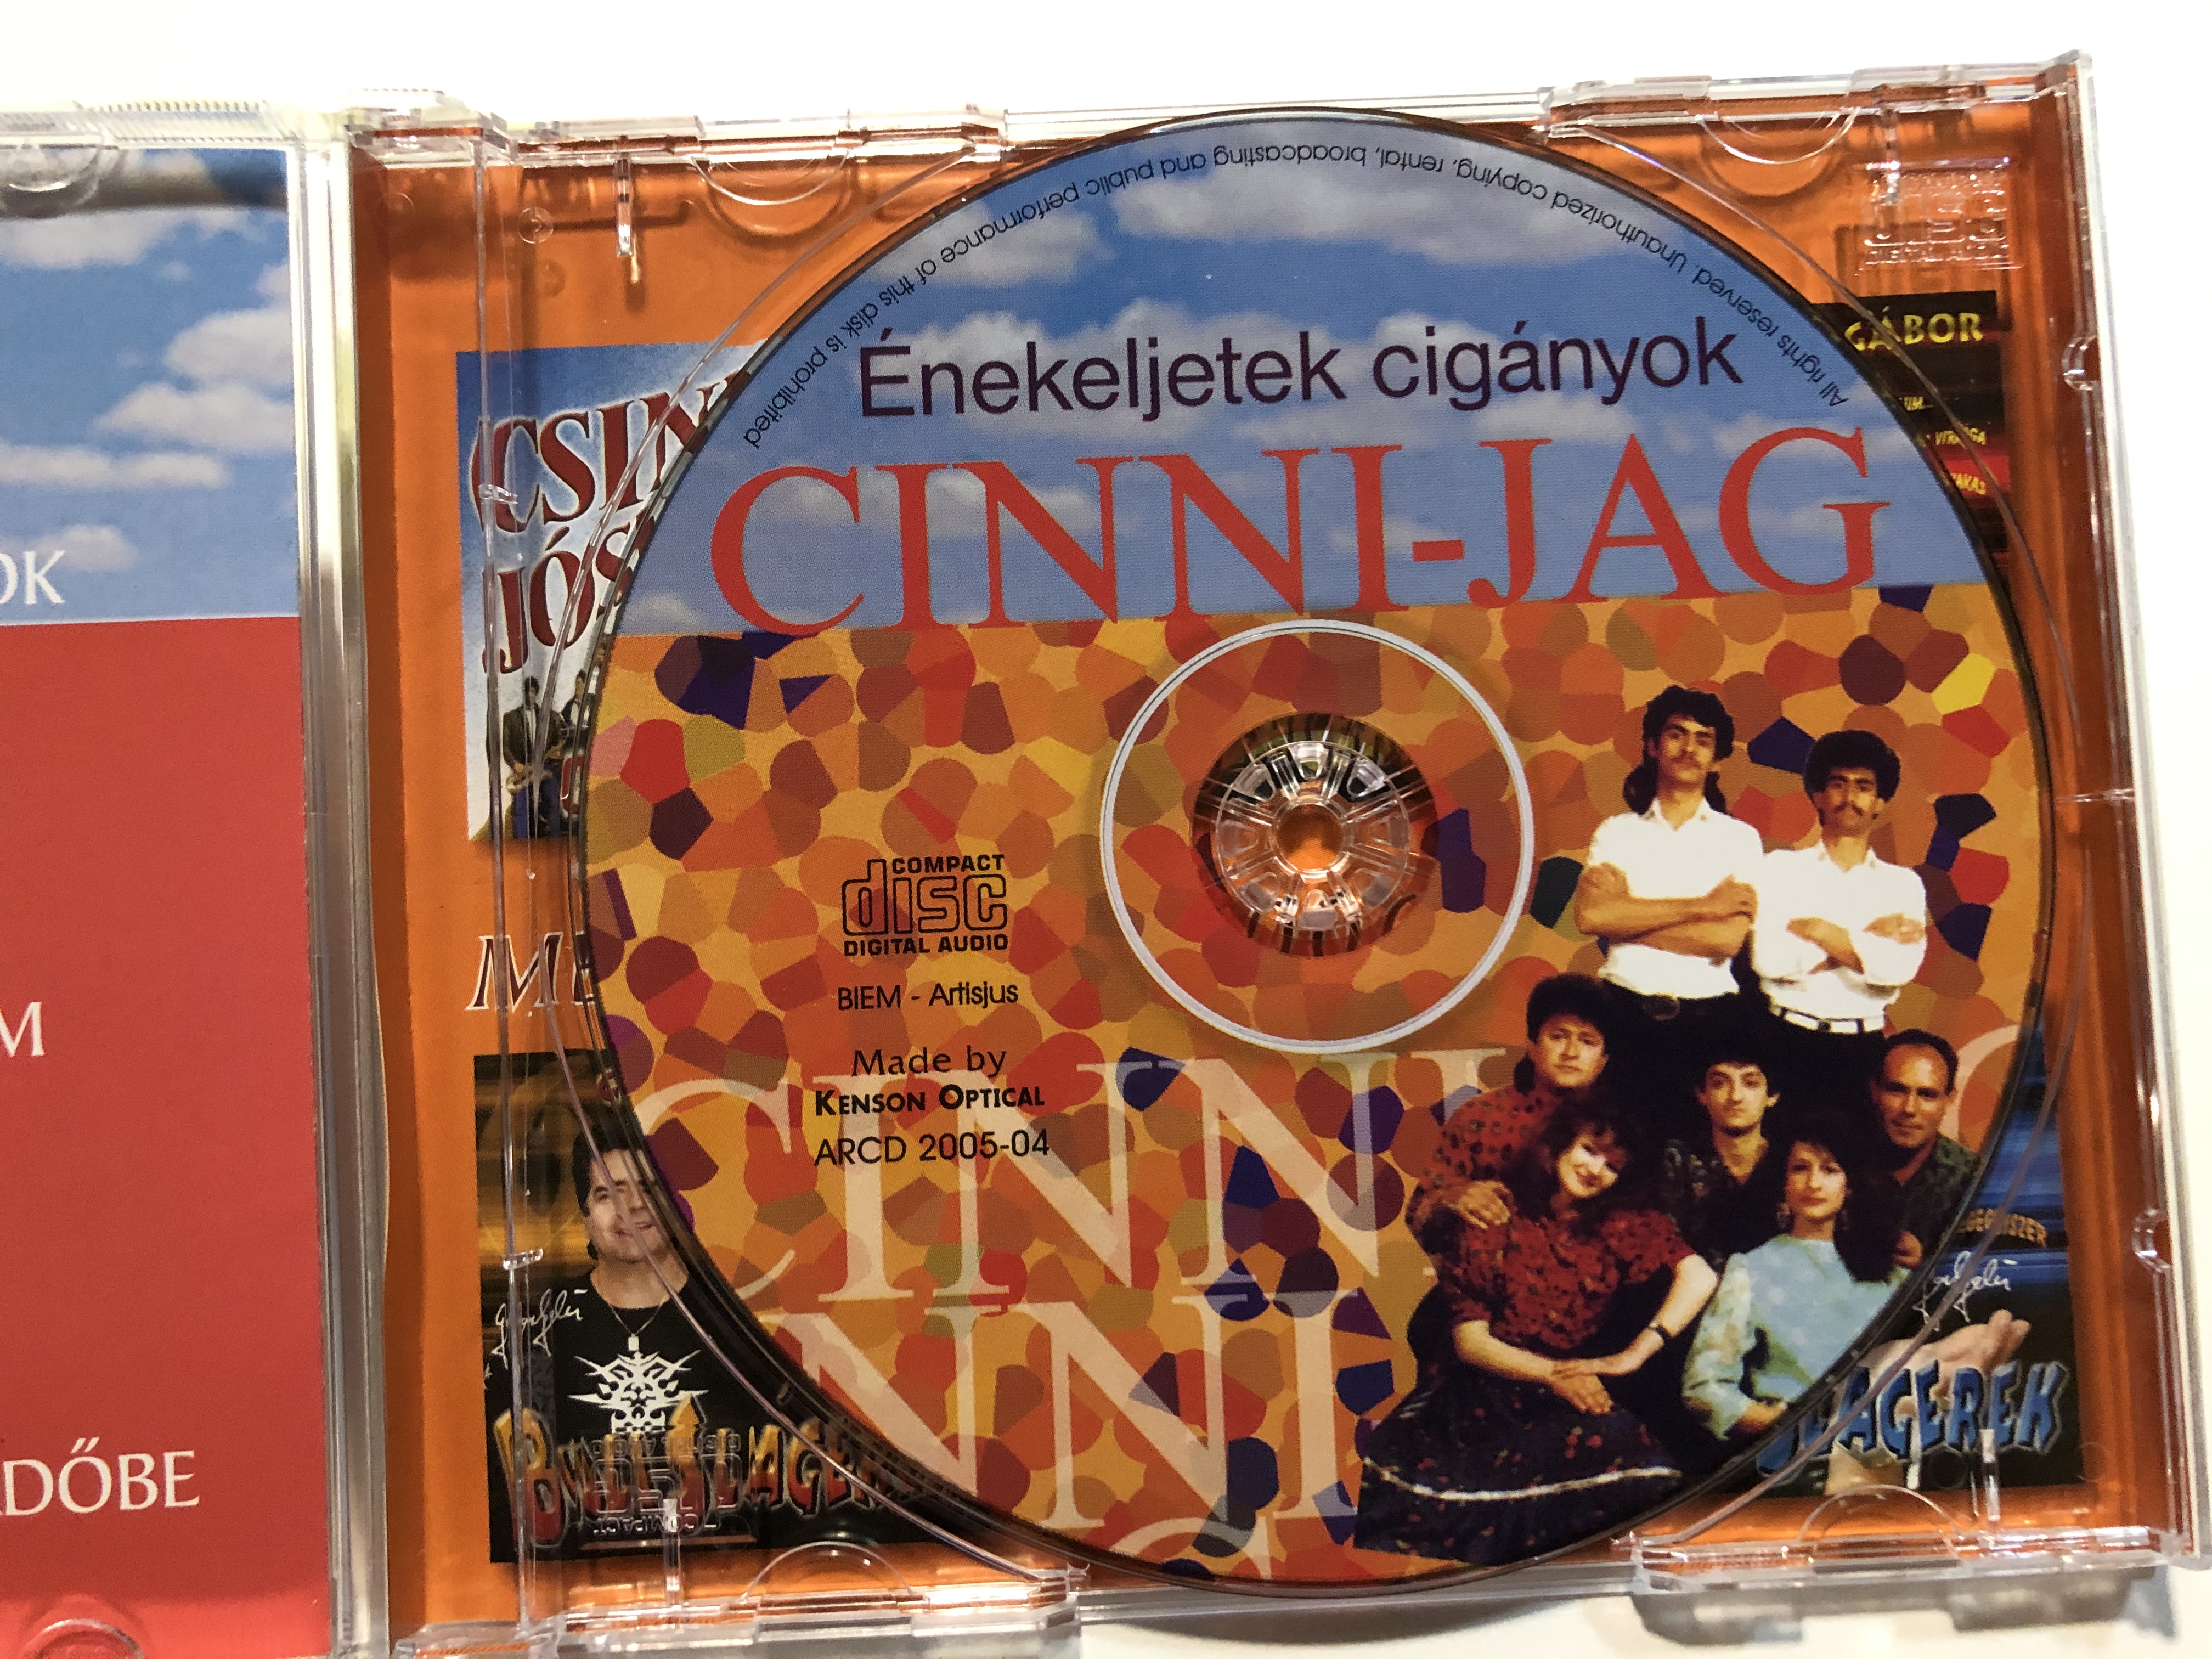 enekeljetek-ciganyok-cinni-jag-arena-holding-audio-cd-arcd-2005-04-3-.jpg